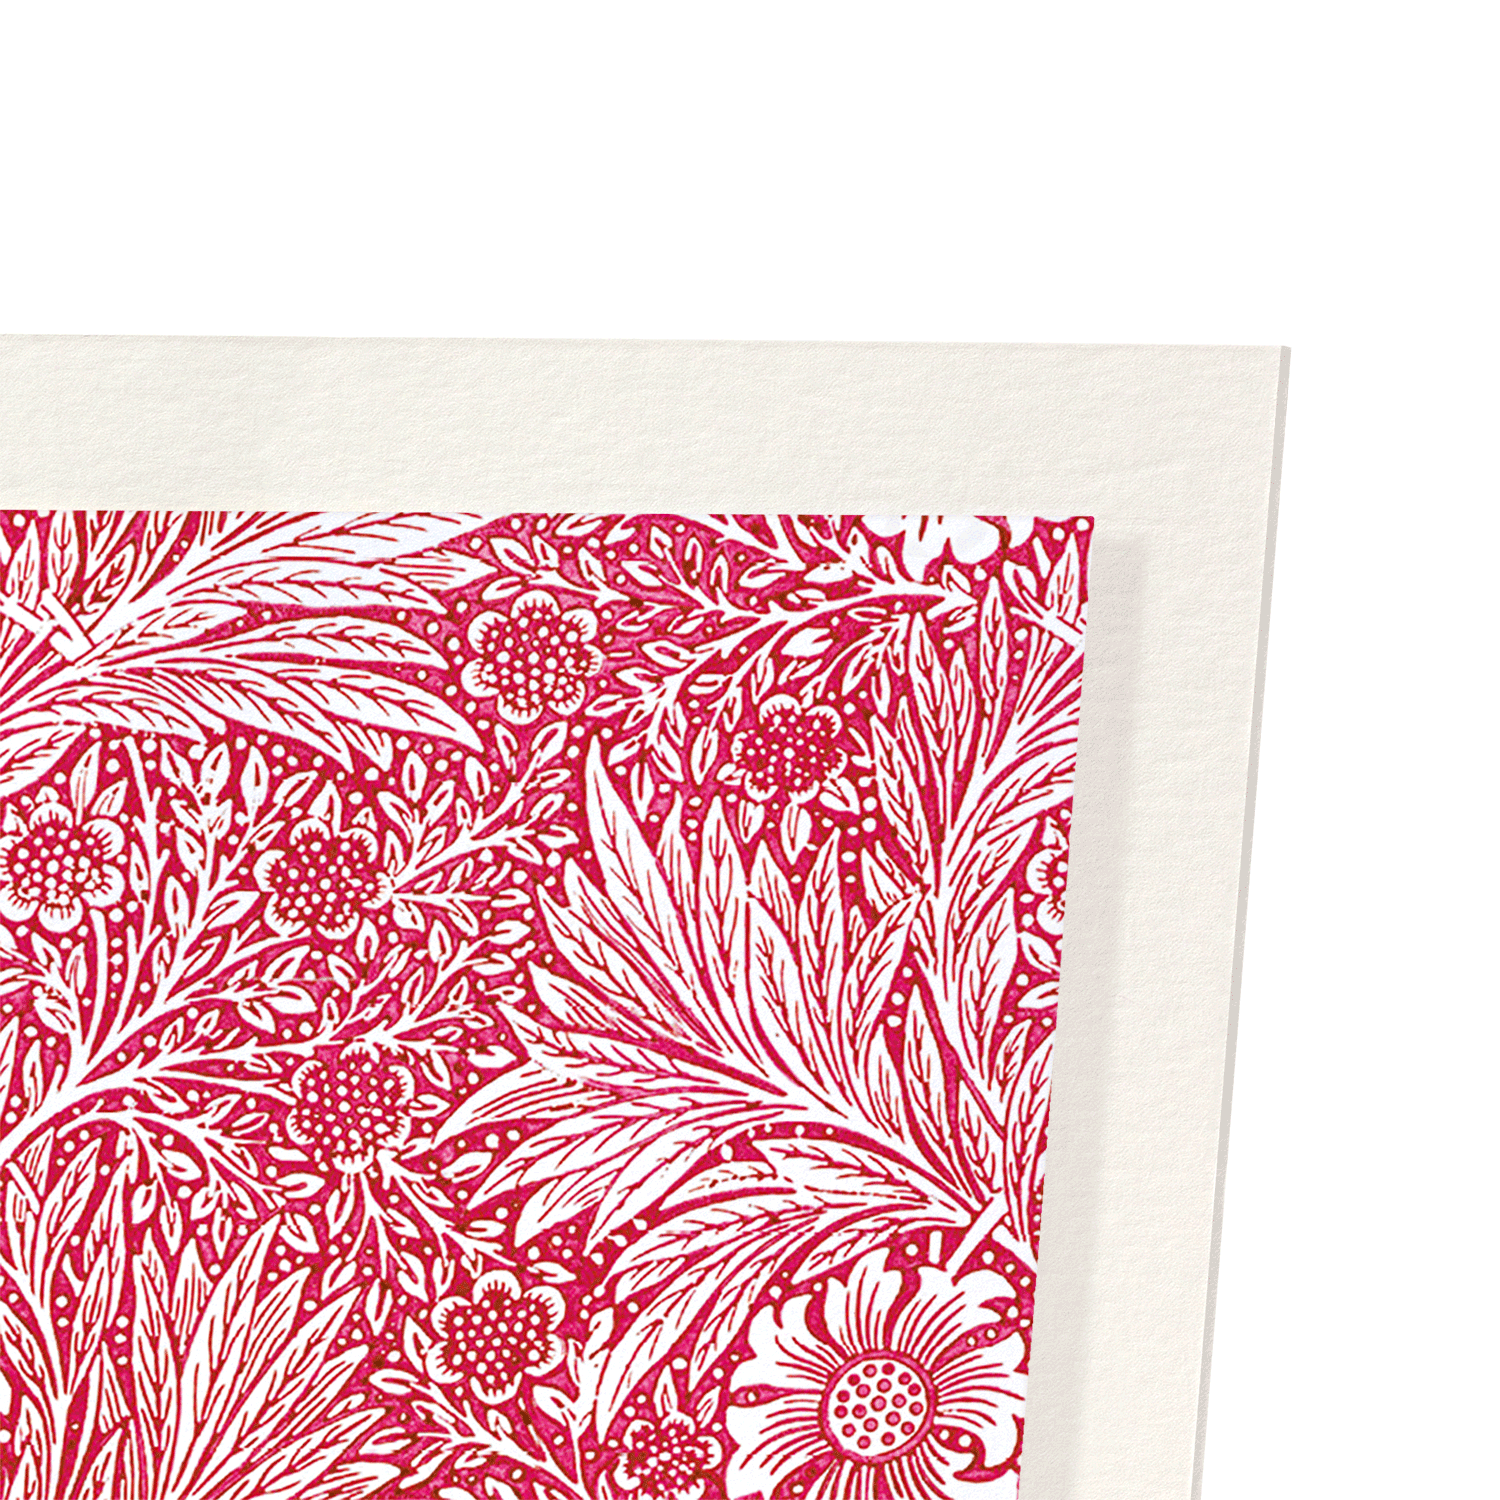 RED MARIGOLD: Pattern Art Print